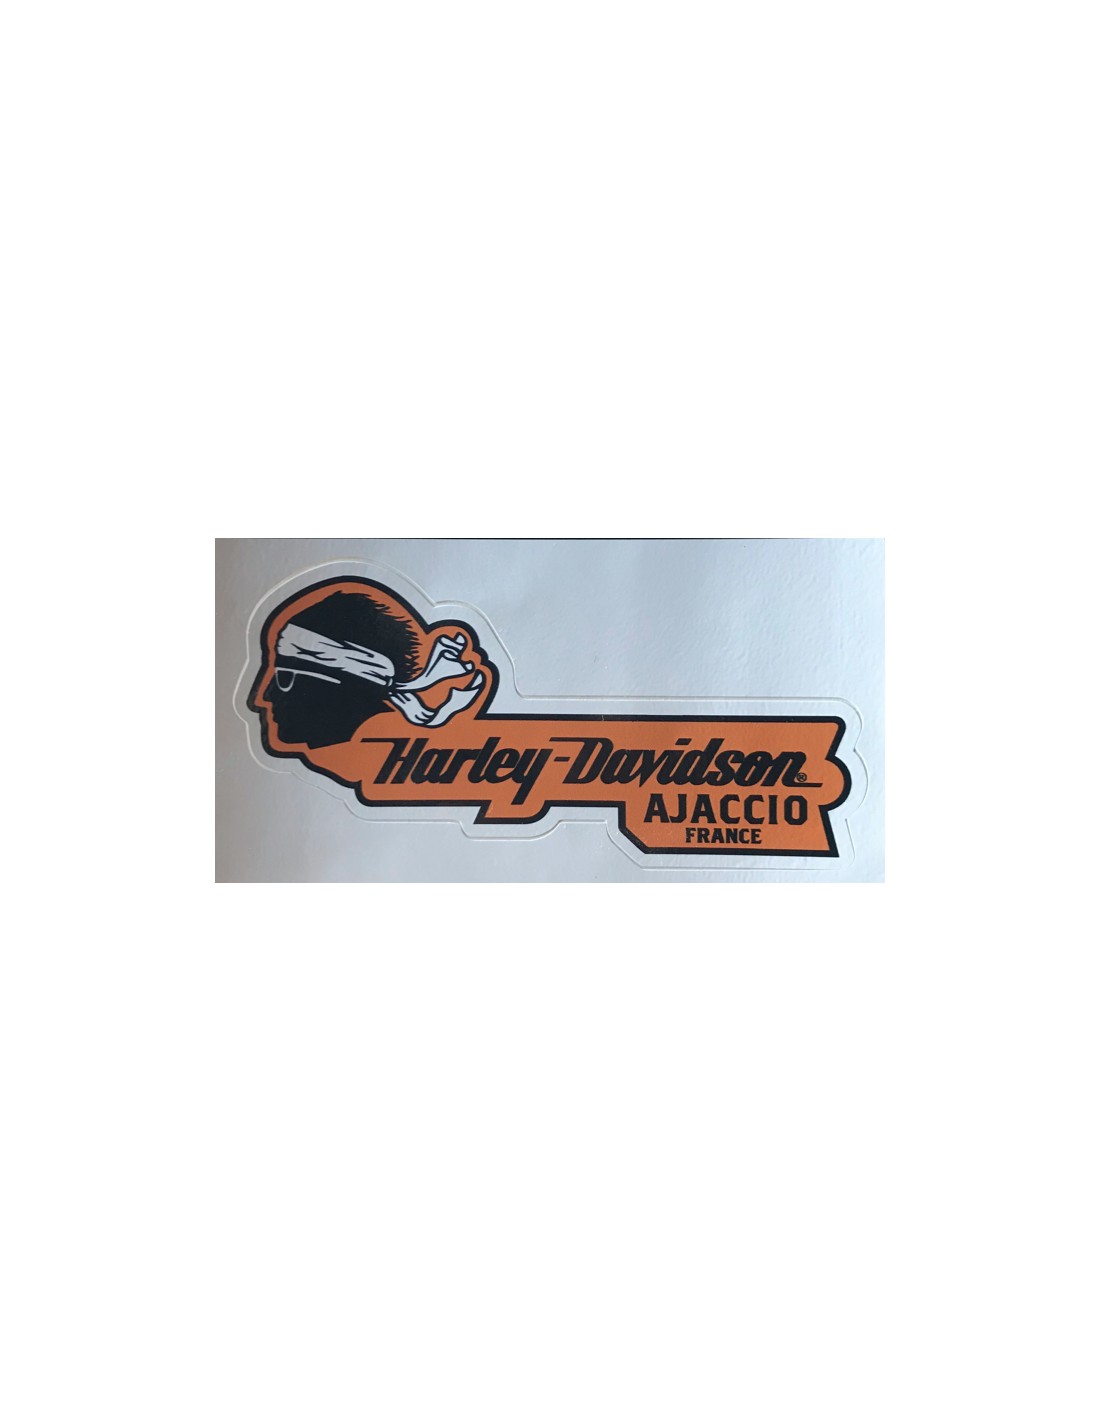 Shop Ajaccio - Homme - Sweets Harley Davidson